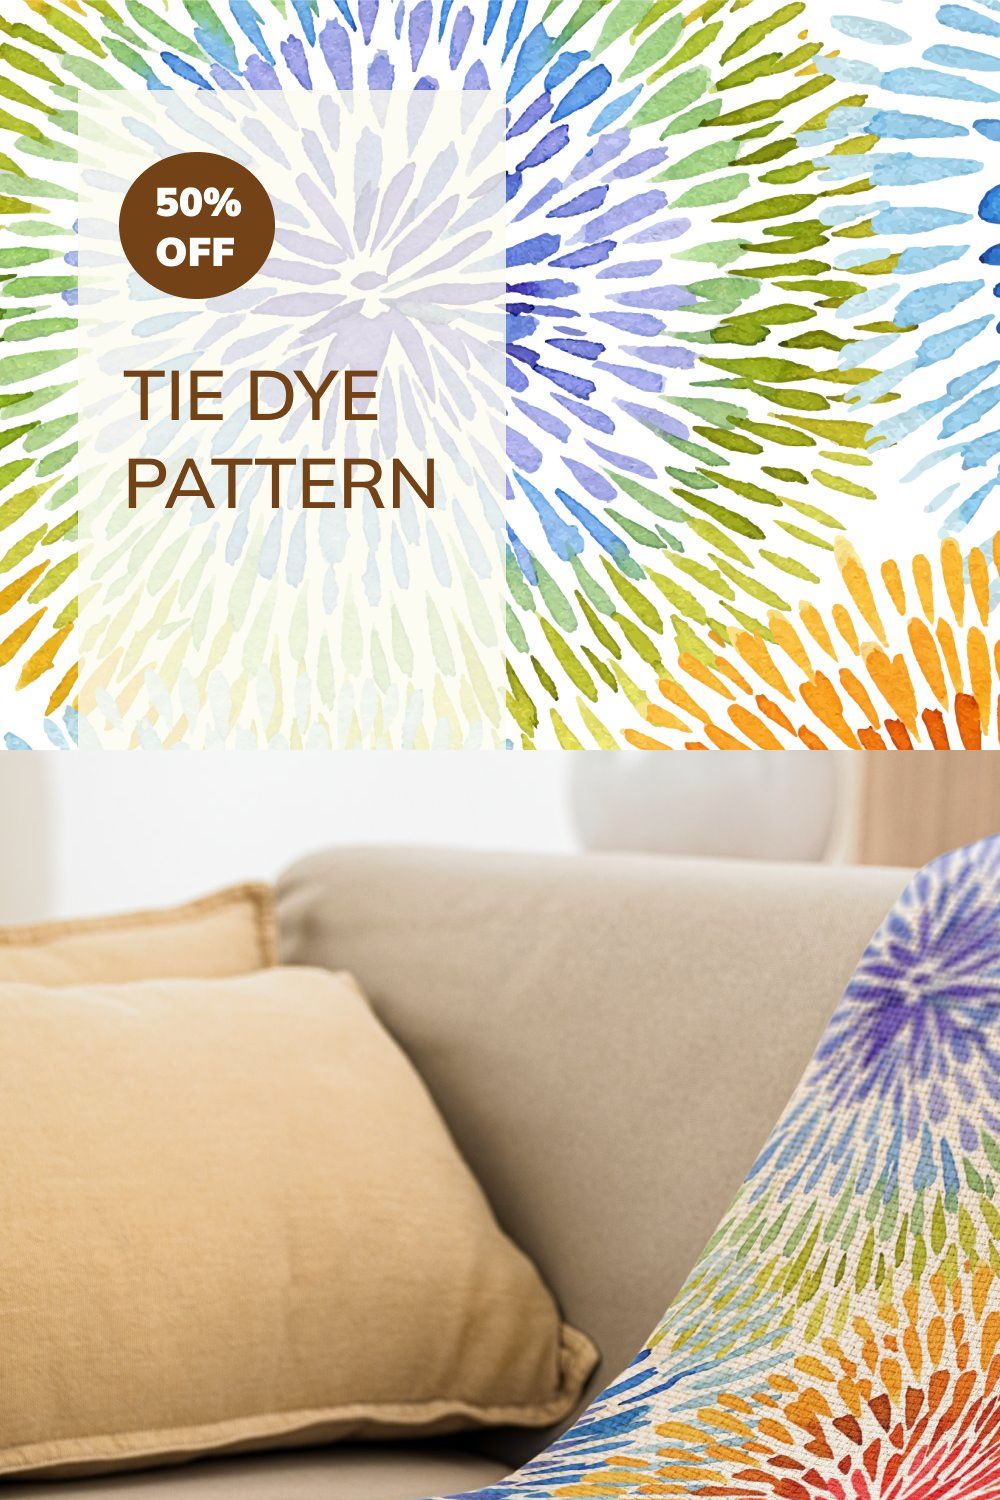 Tie Dye Pattern Procreate Brush pinterest preview image.